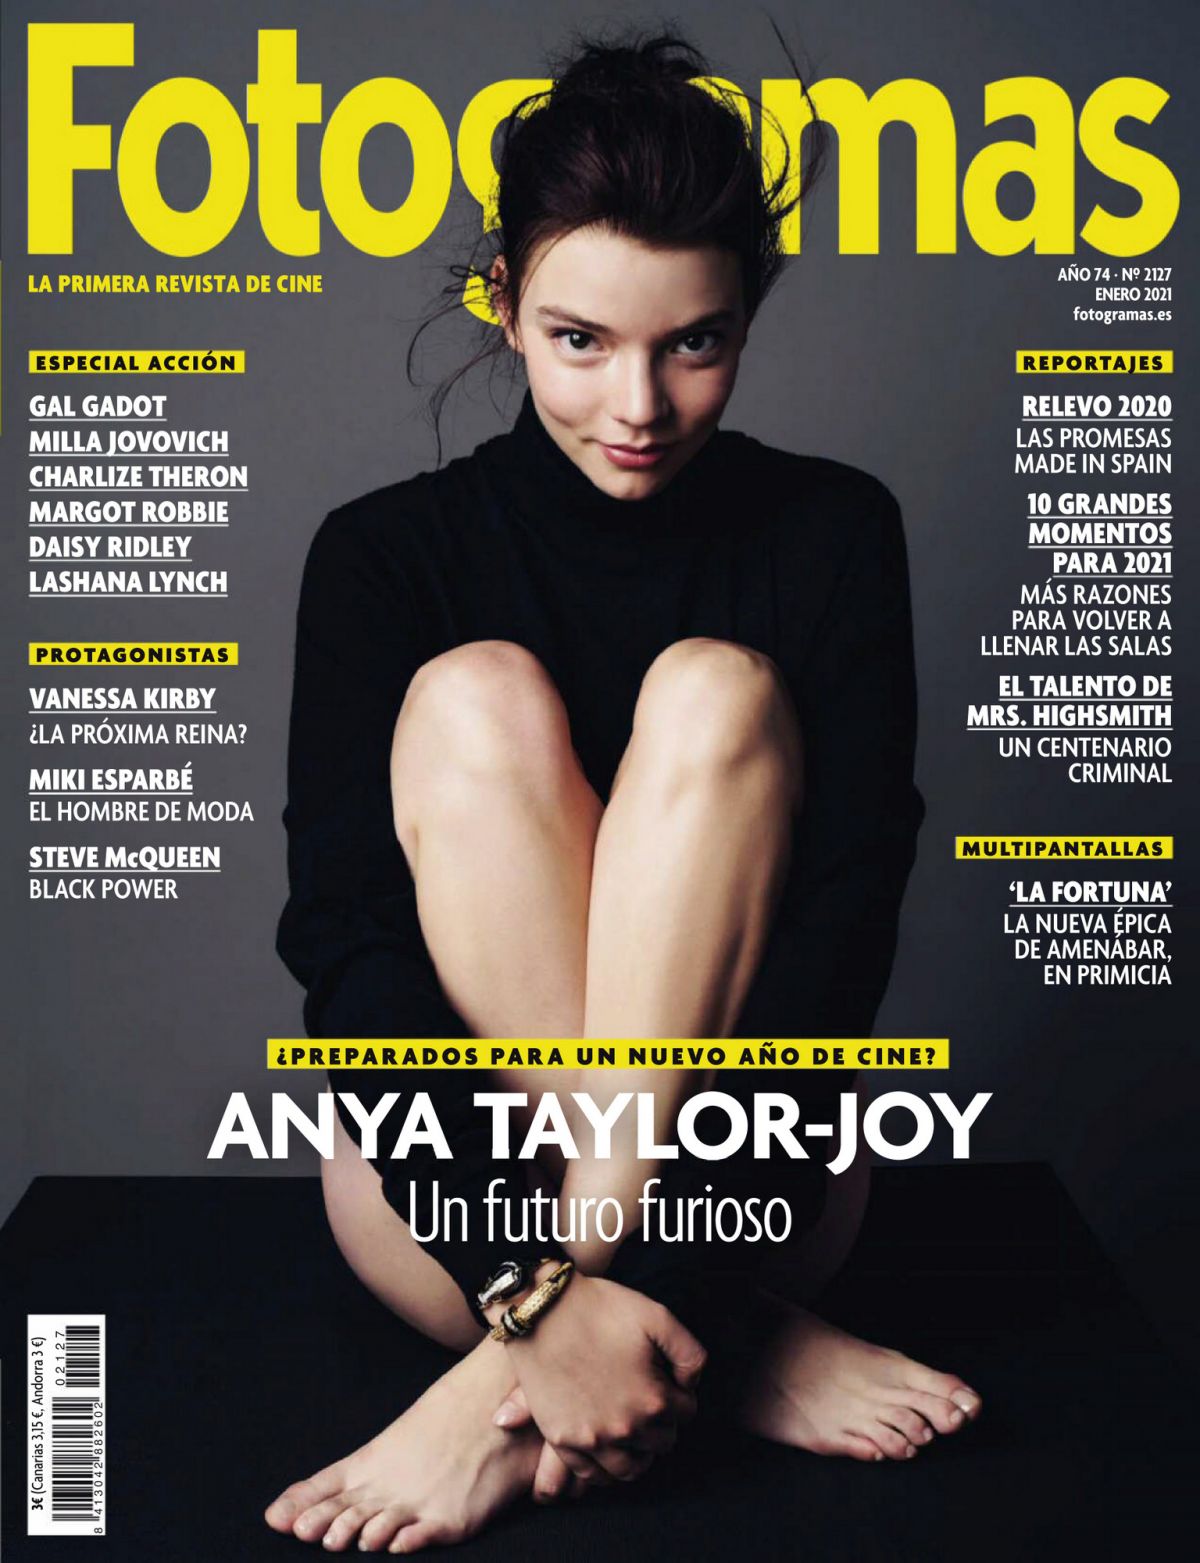 anya-taylor-joy-in-fotogramas-magazine-january-2021-3.jpg